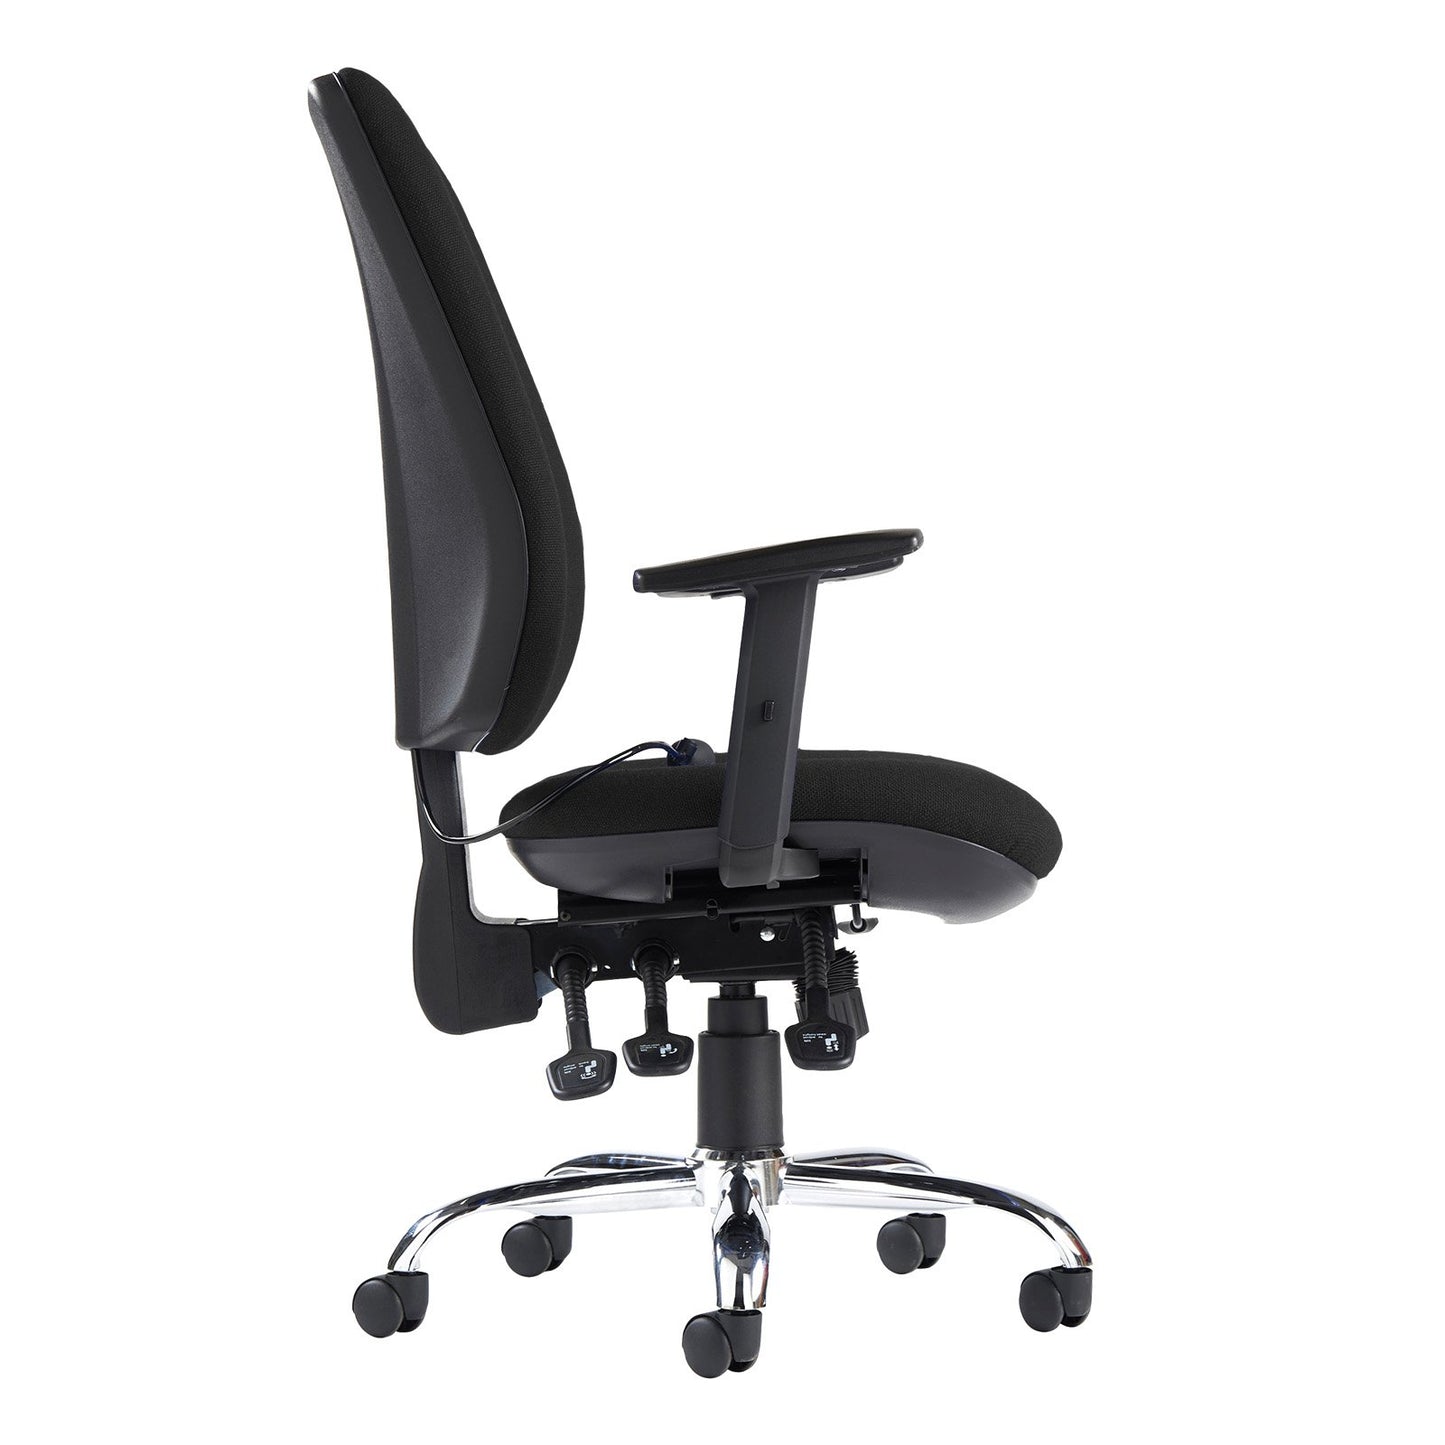 Senza Ergo 24hr ergonomic task chair